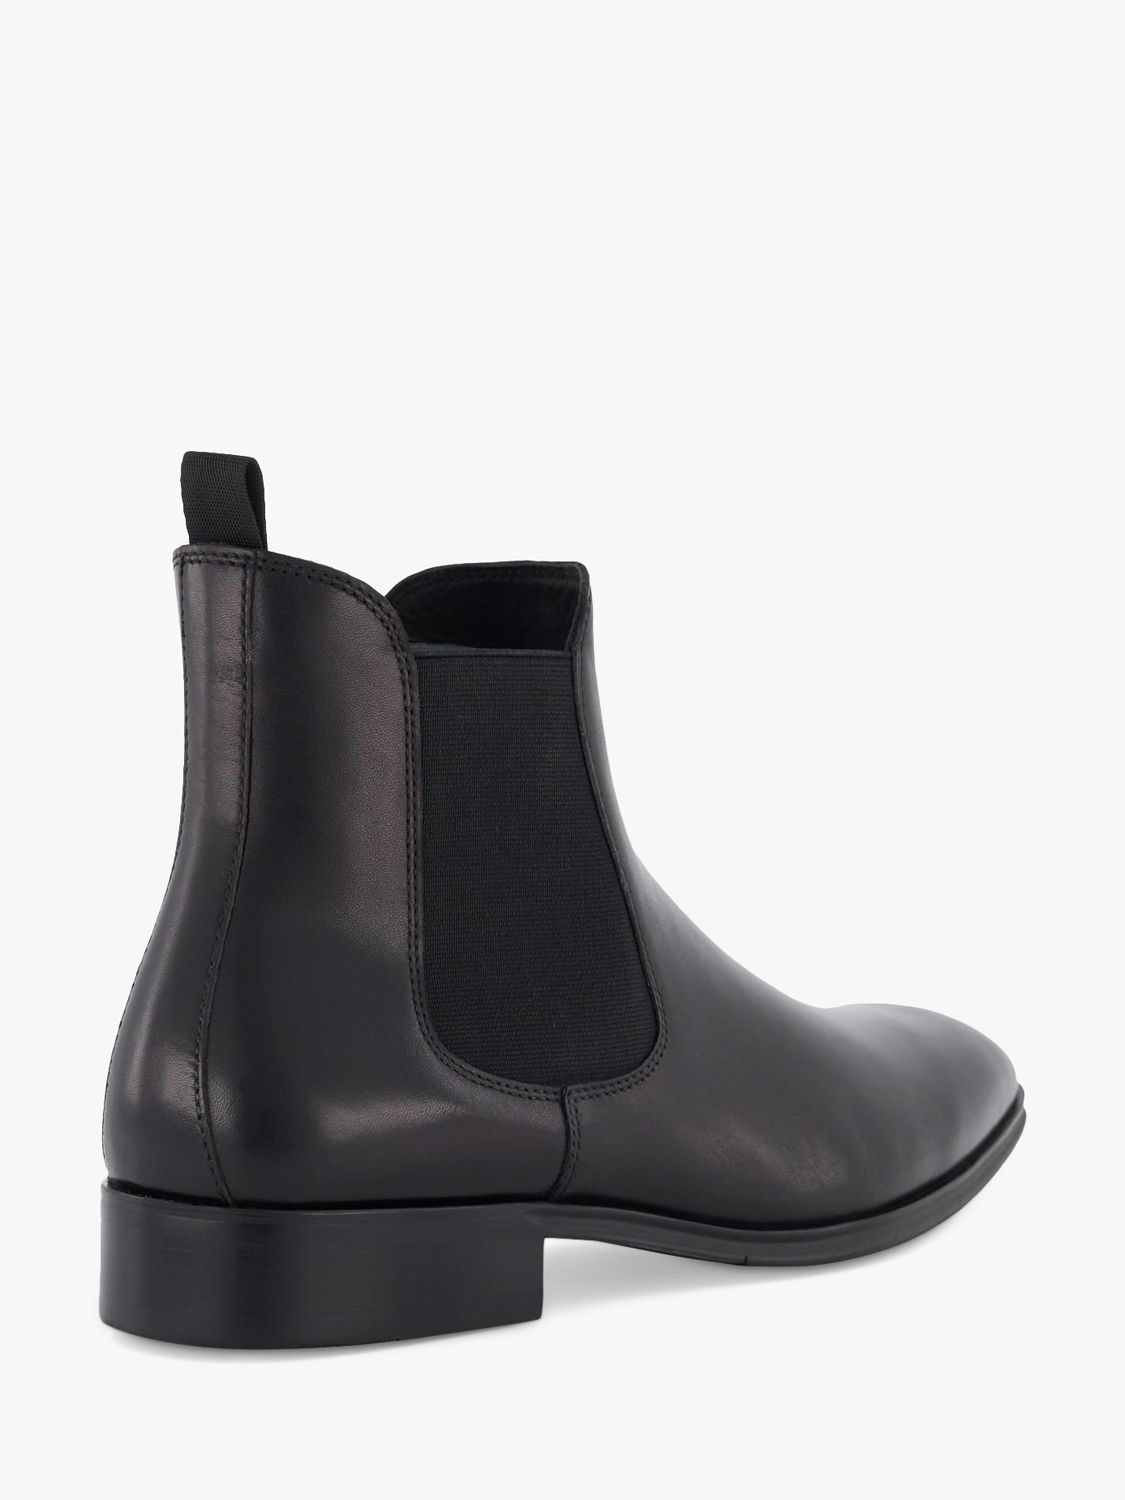 Buy Dune Mandatory Leather Chelsea Boots, Black Online at johnlewis.com